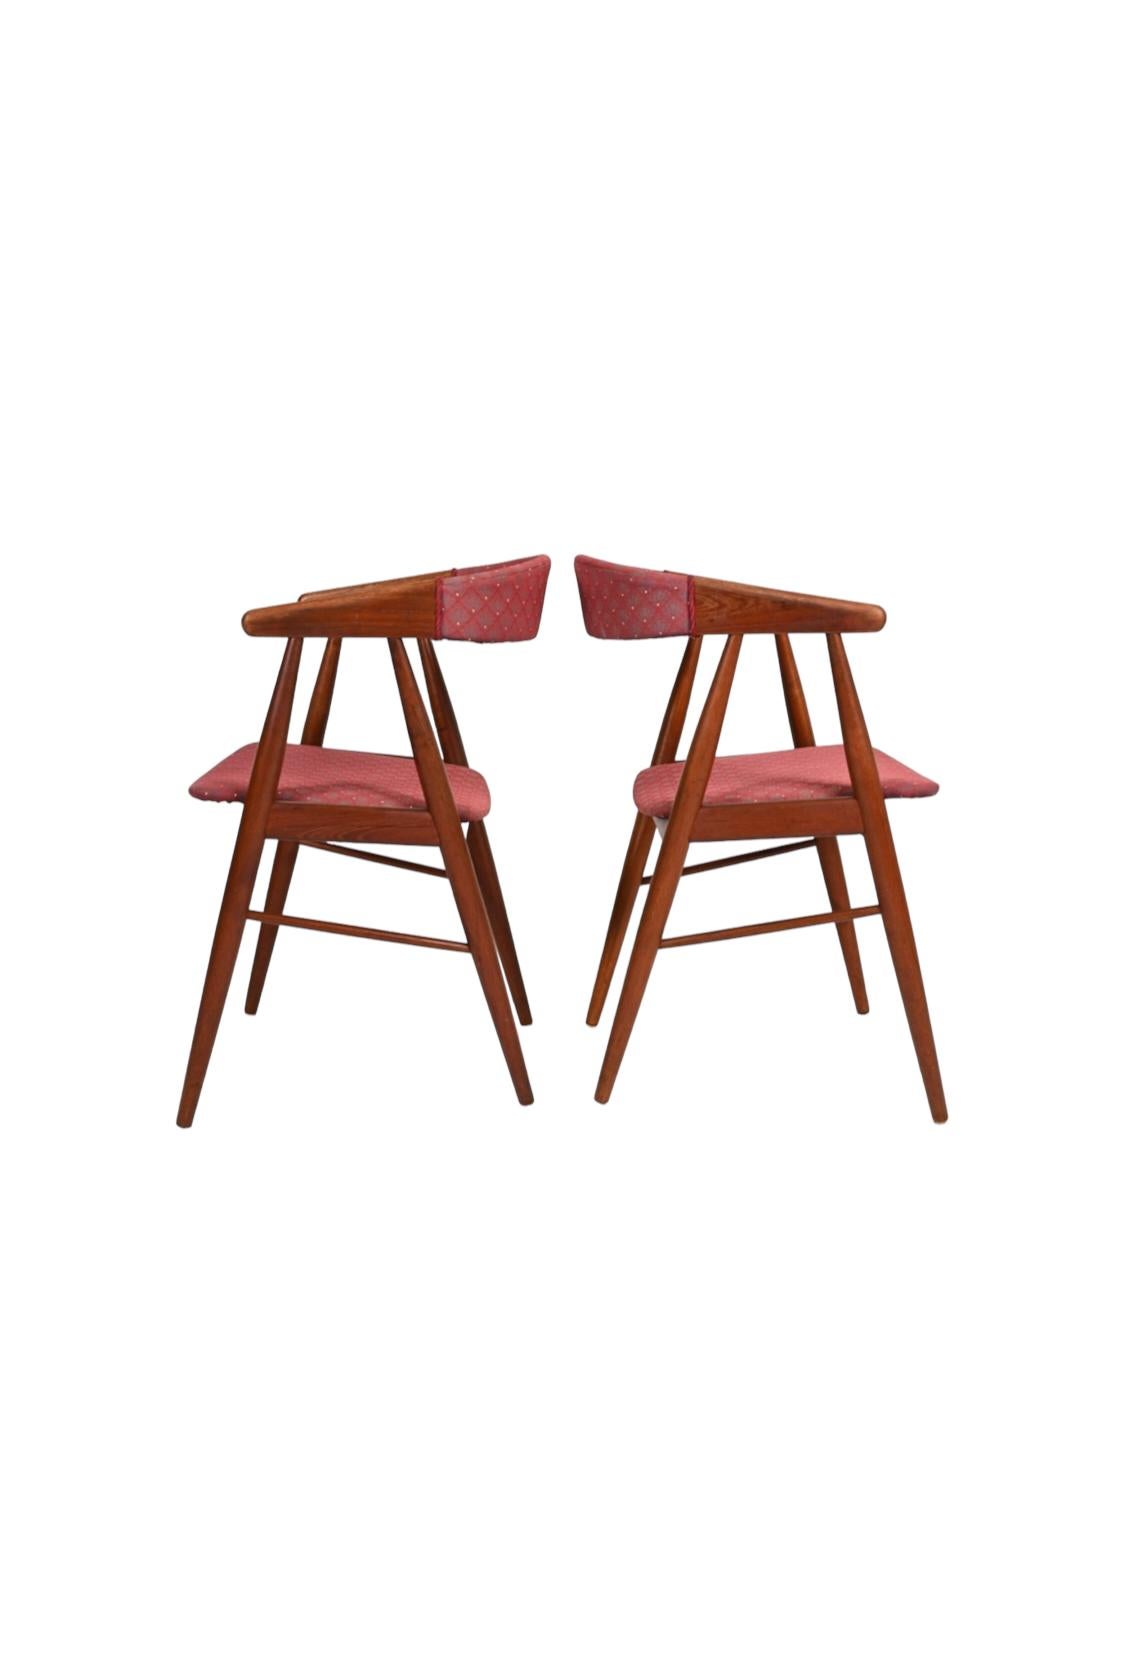 20th Century Danish Modern Teak Dining Chairs by Aksel Bender Madsen & Ejner Larsen